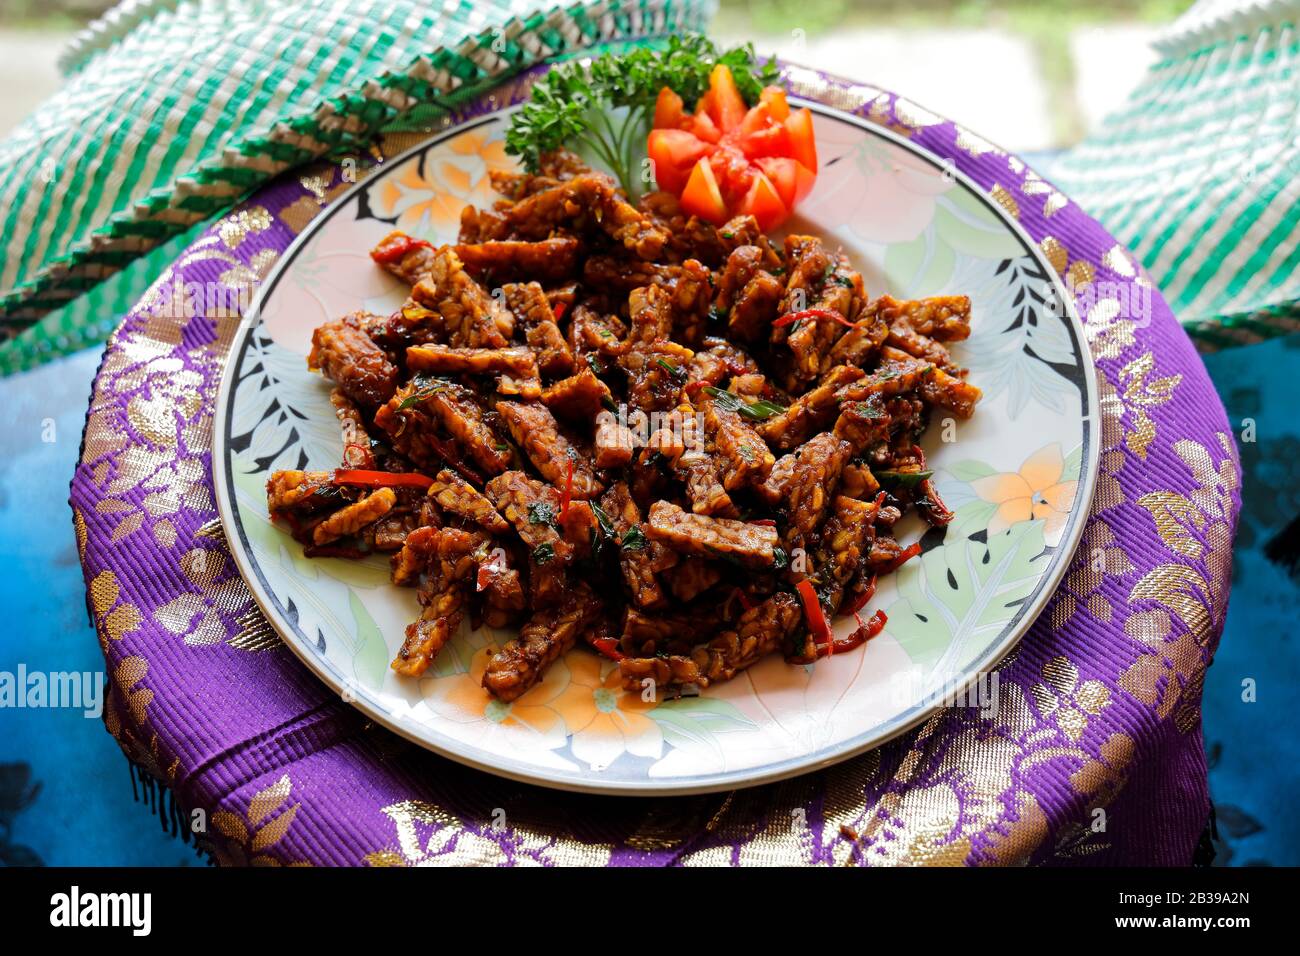 Indonesien-Essen - Tempeh Goreng oder gebratenes Tempeh - balinesische vegetarische Speisen Stockfoto